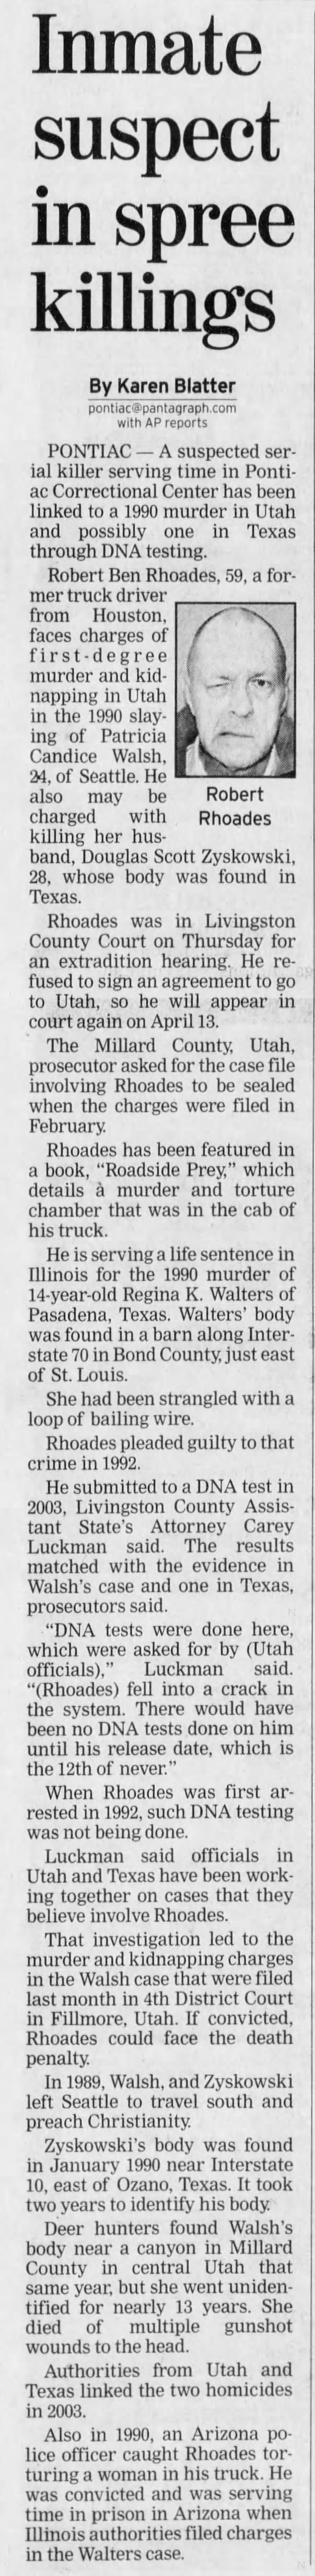 Ronald Ben Rhoades killer of Regina Kay Walters of Pasedena Texas and her husband.